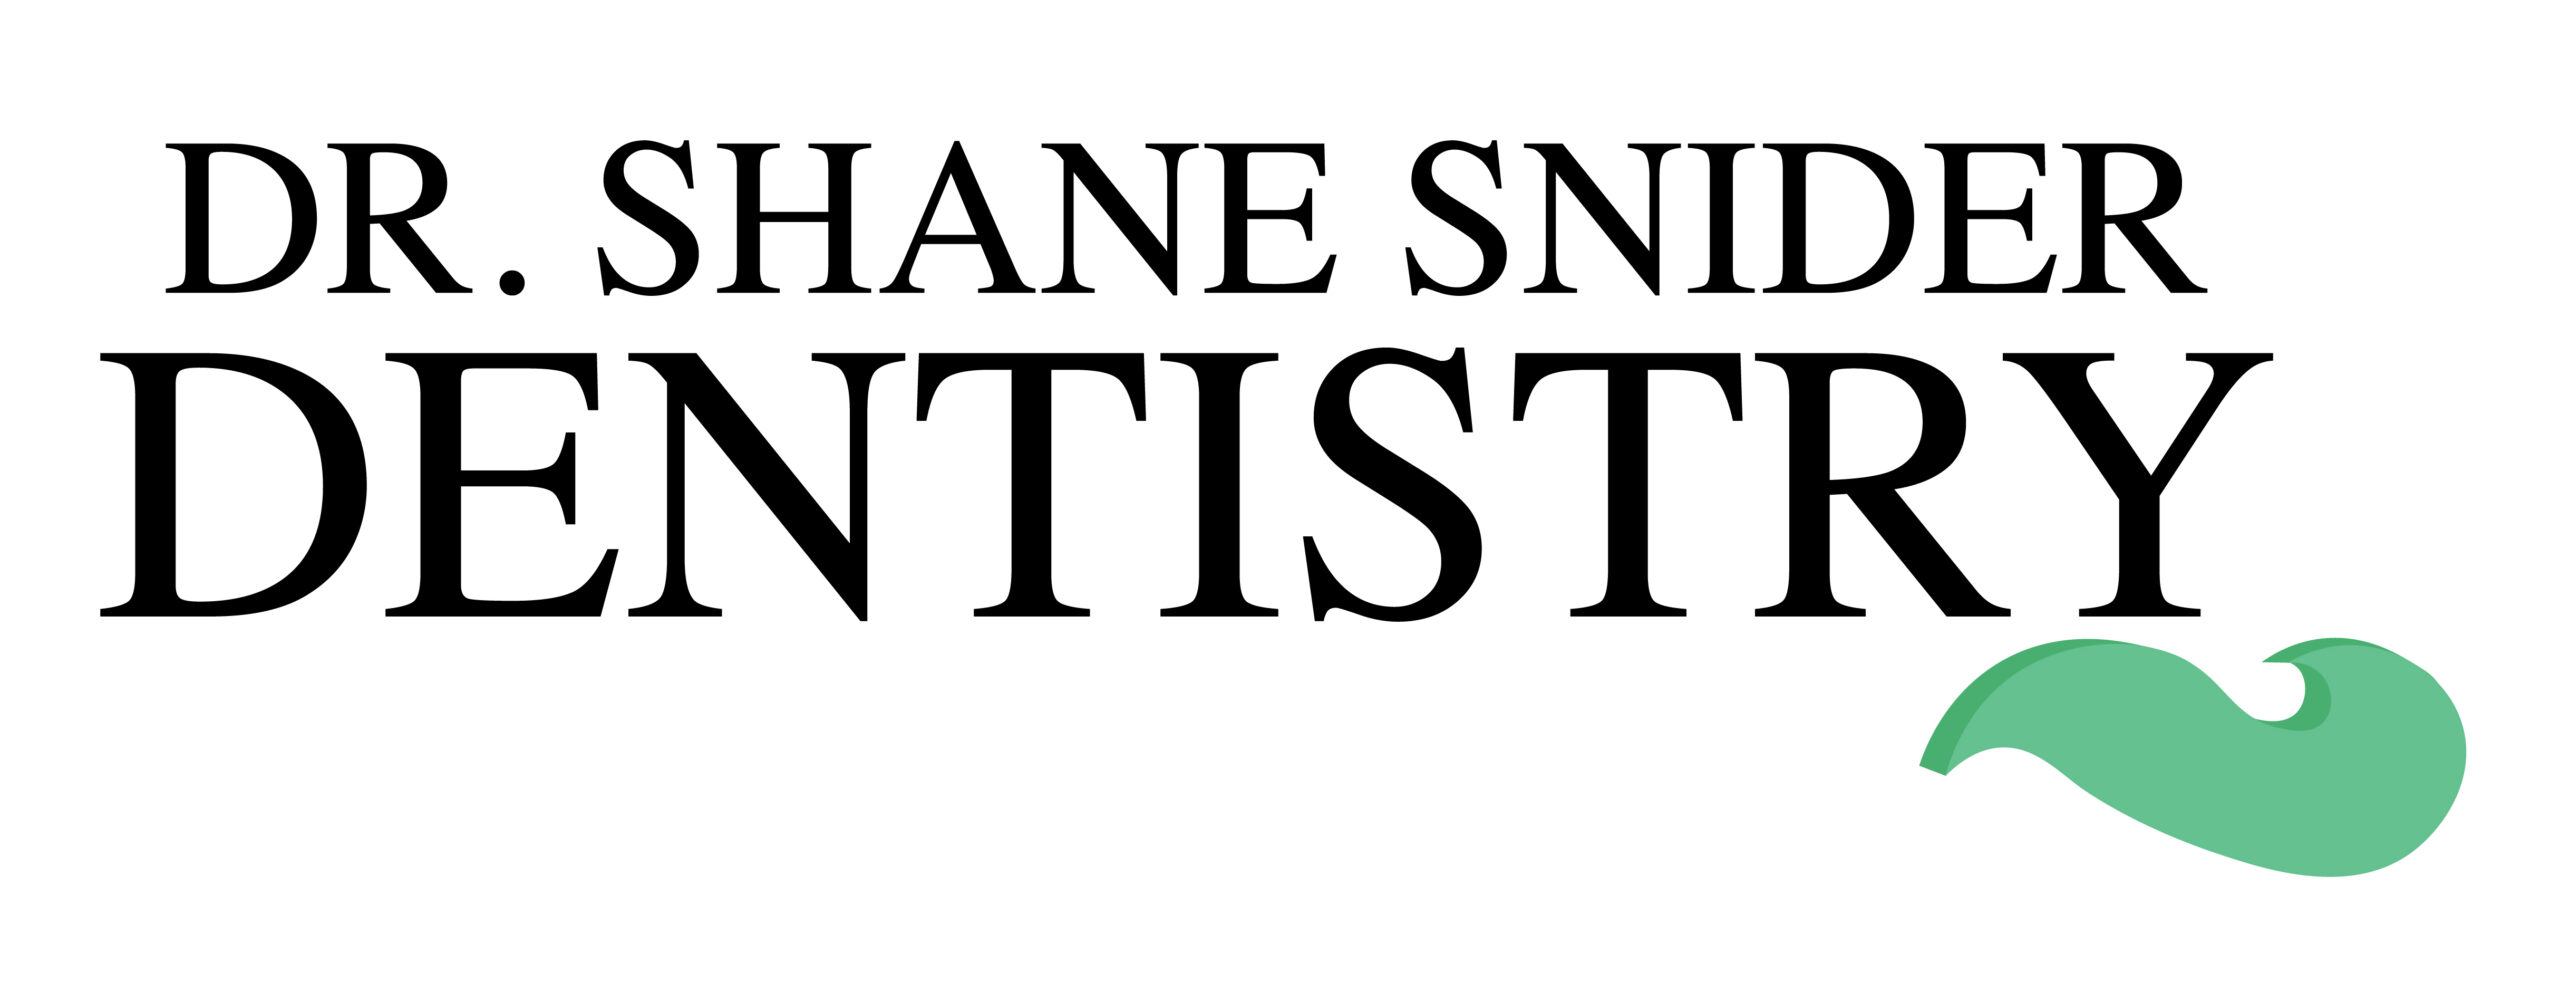 Dr. Shane Snider Dentistry